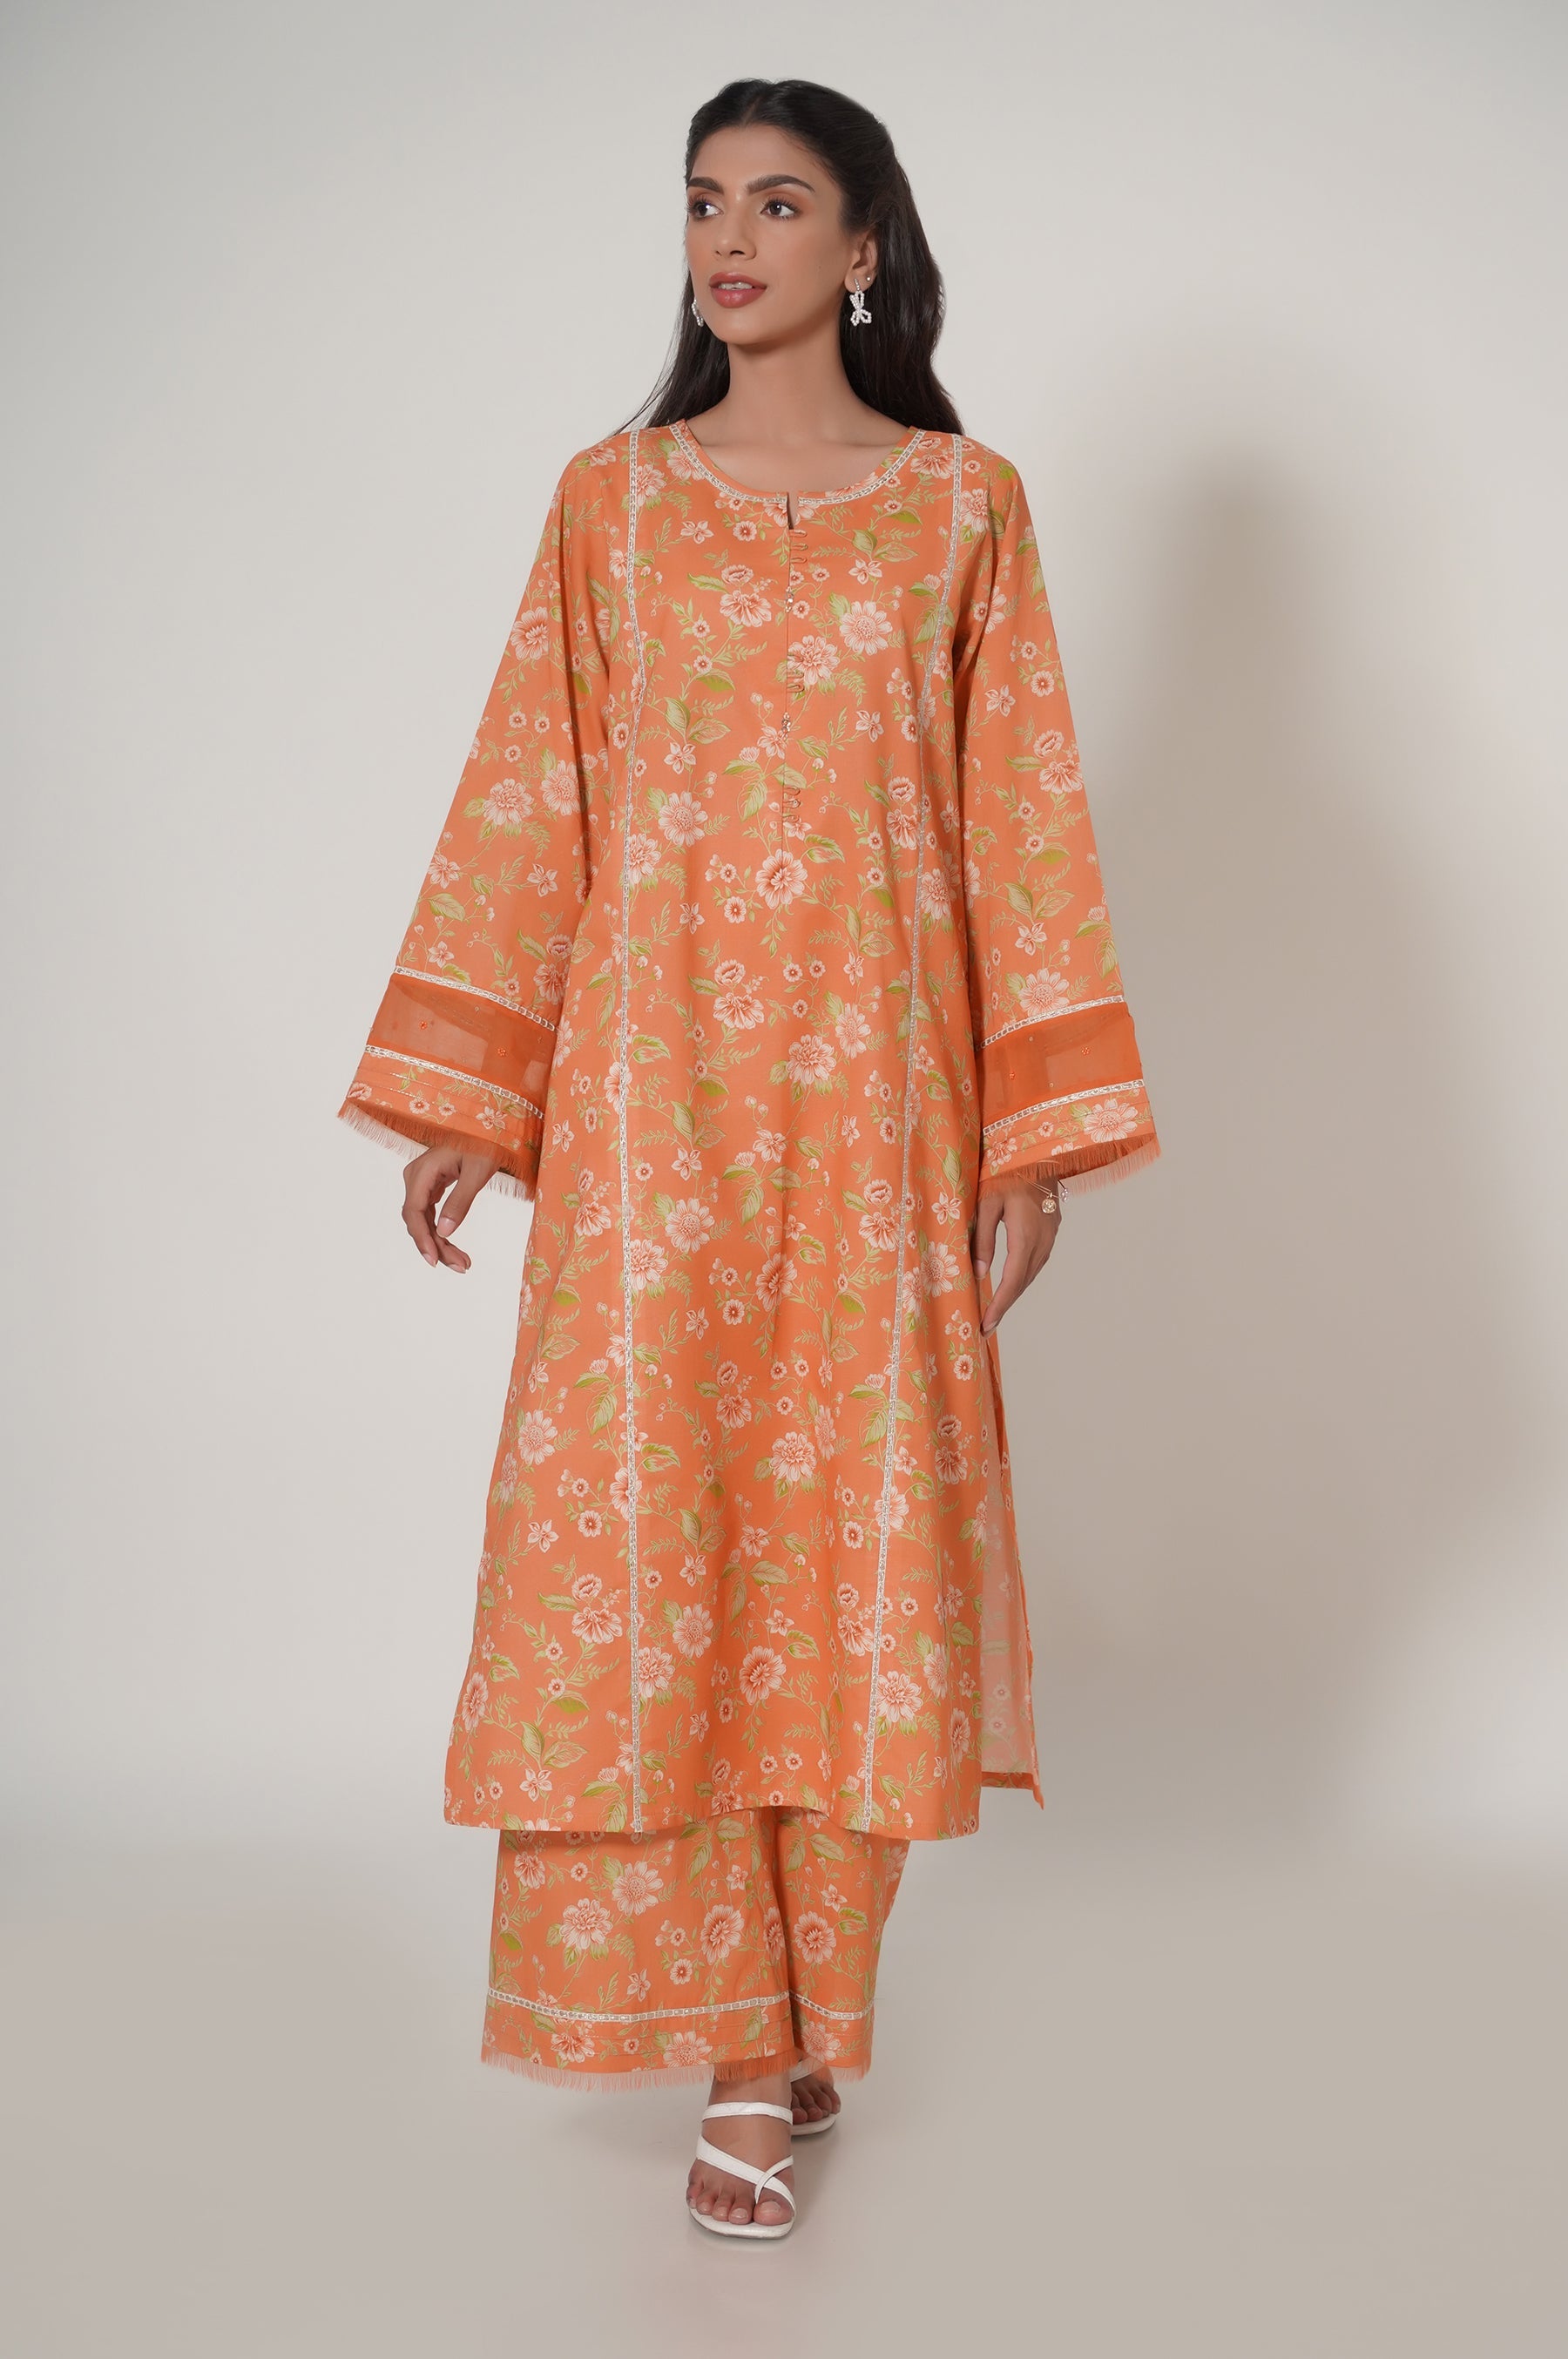 Zeen | Summer Collection 24 | 33624 - Khanumjan  Pakistani Clothes and Designer Dresses in UK, USA 